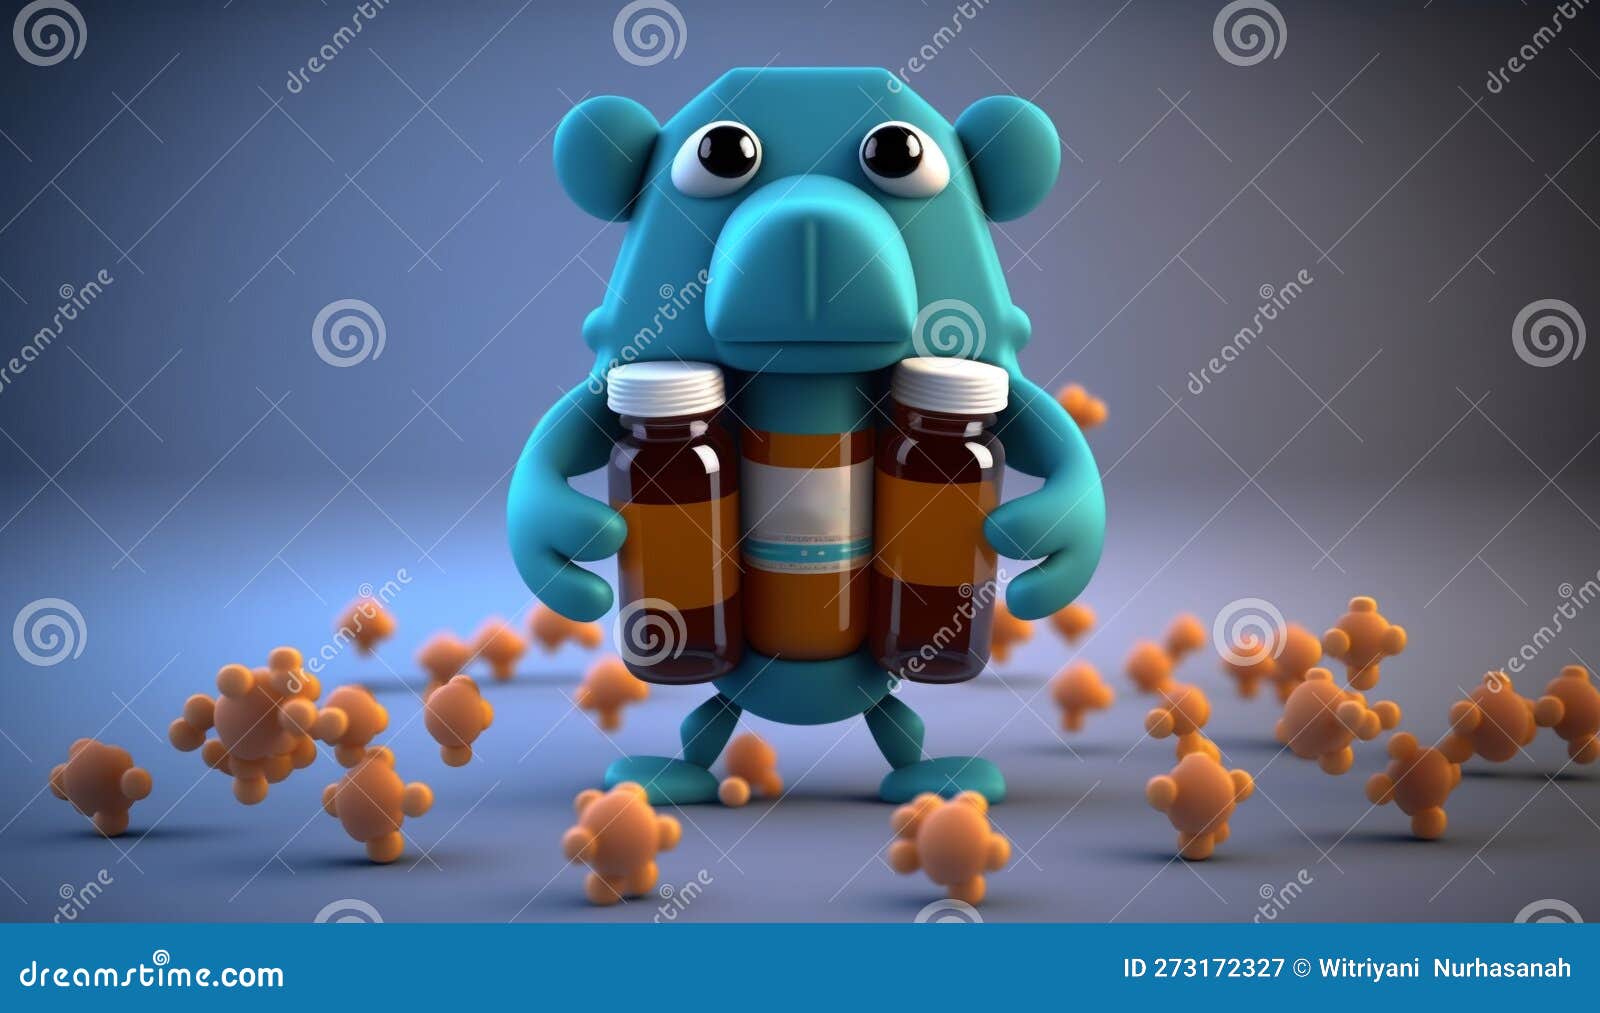 monkey with antibiotics. monkey pox new disease dangerous over the world. monkeypox s